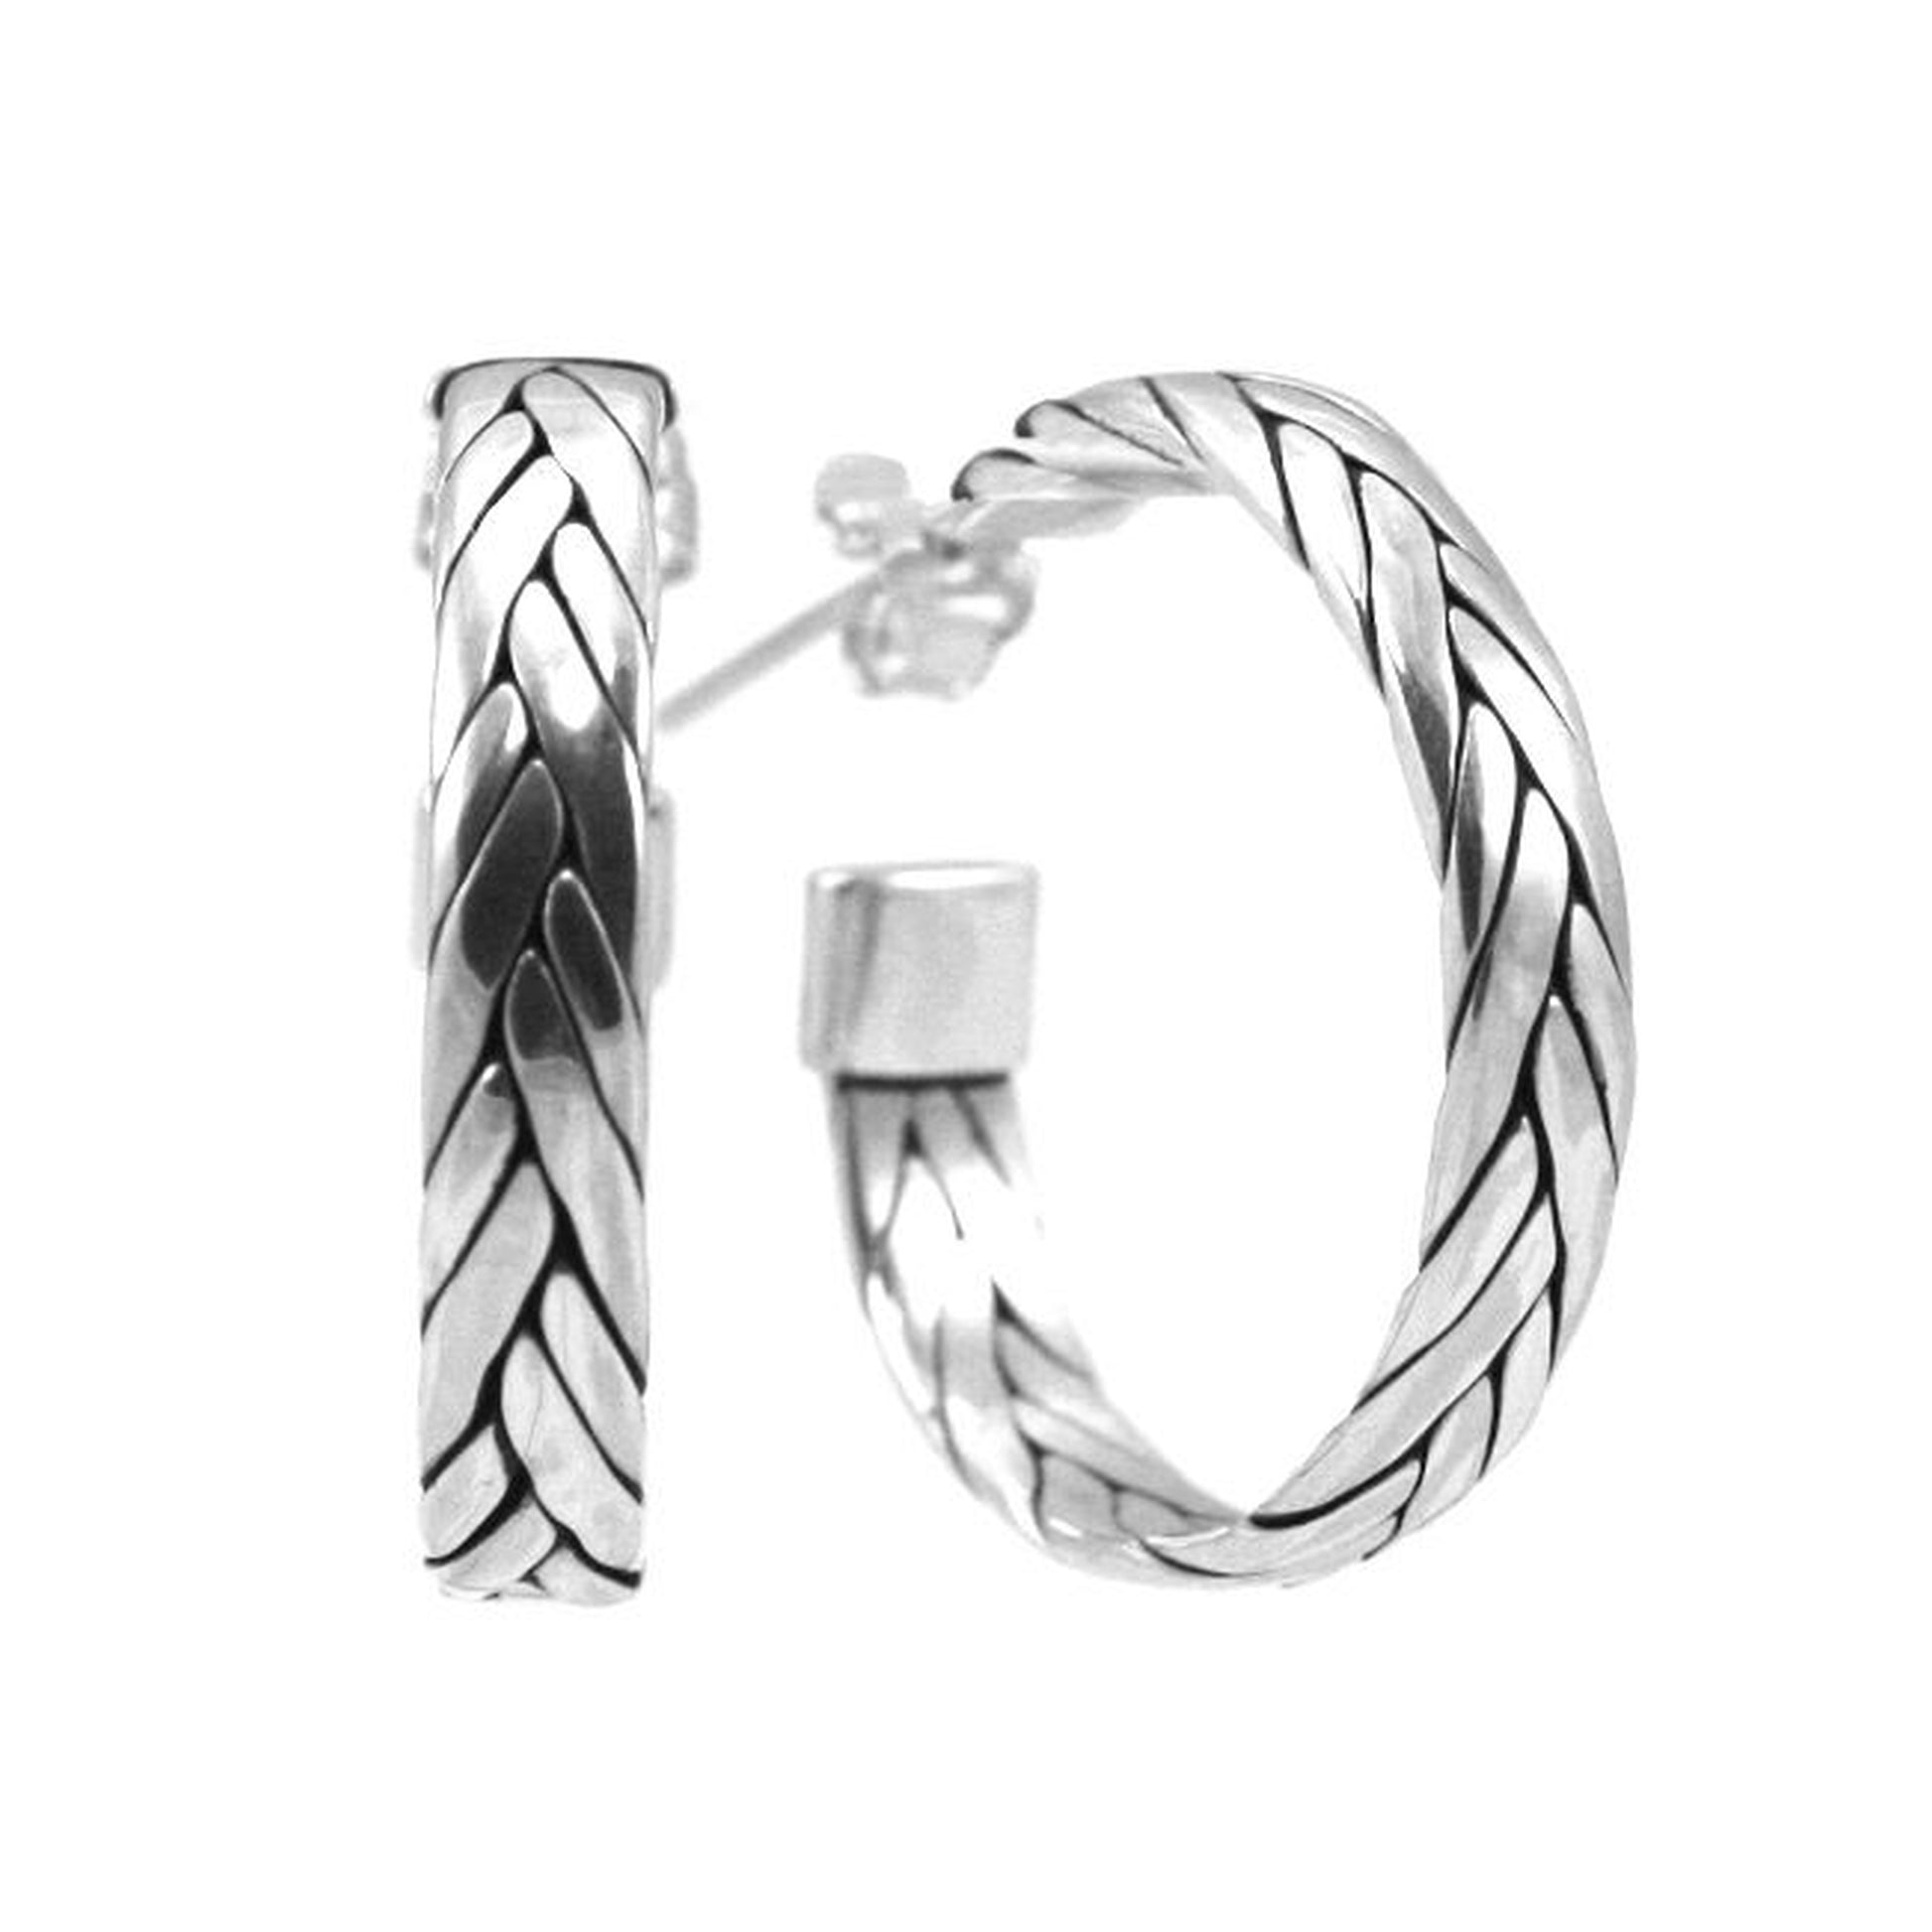 Woven silver three-quarter hoop post earrings.